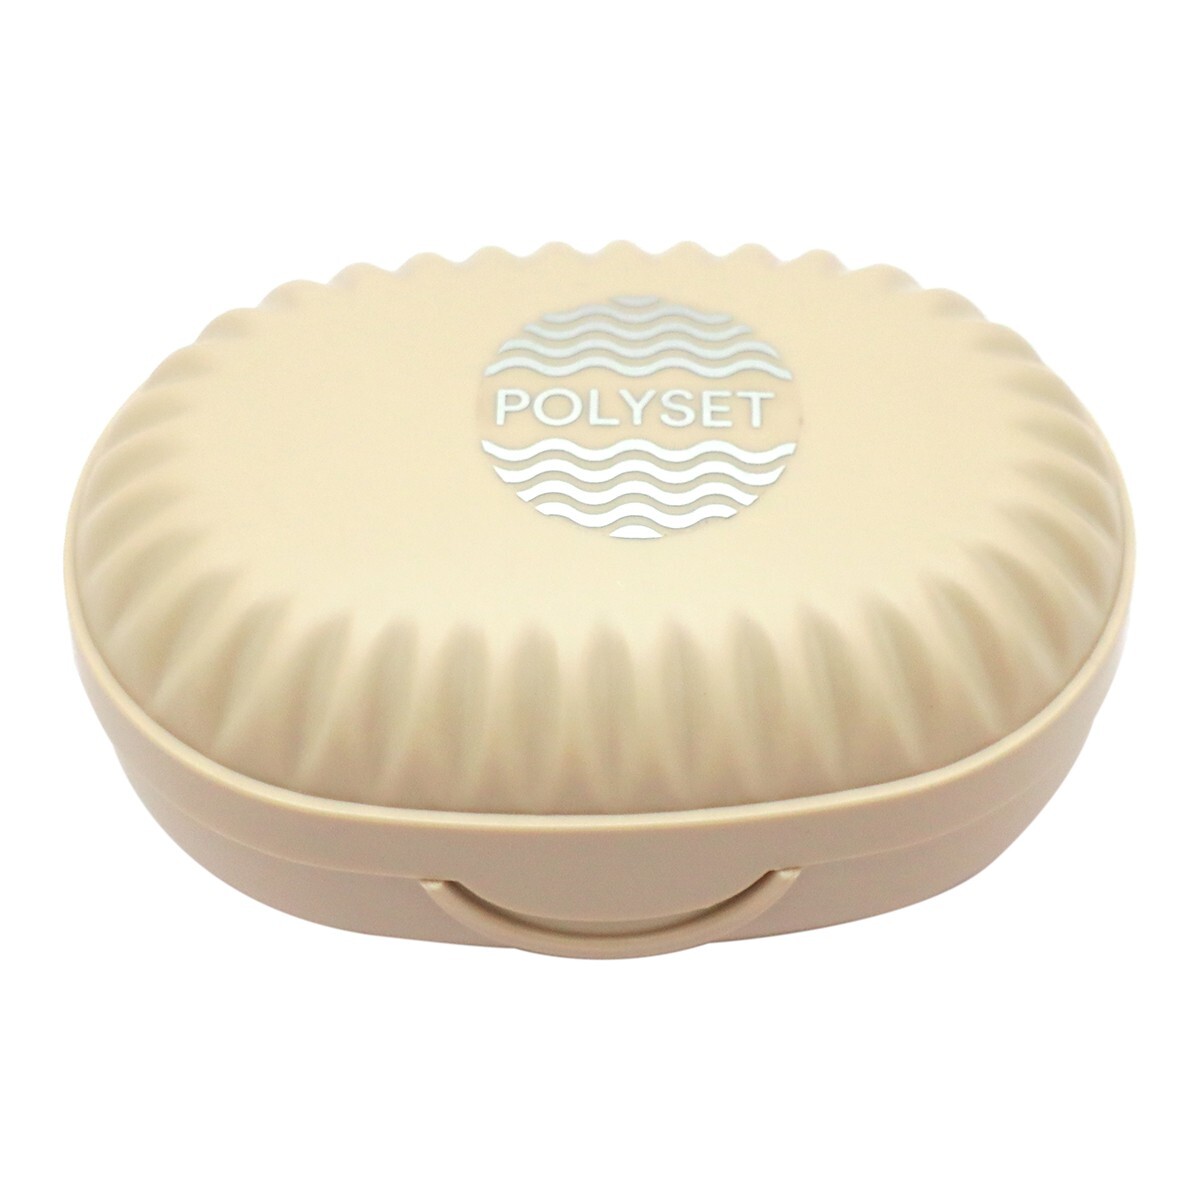 Polyset Oyster Soap Case